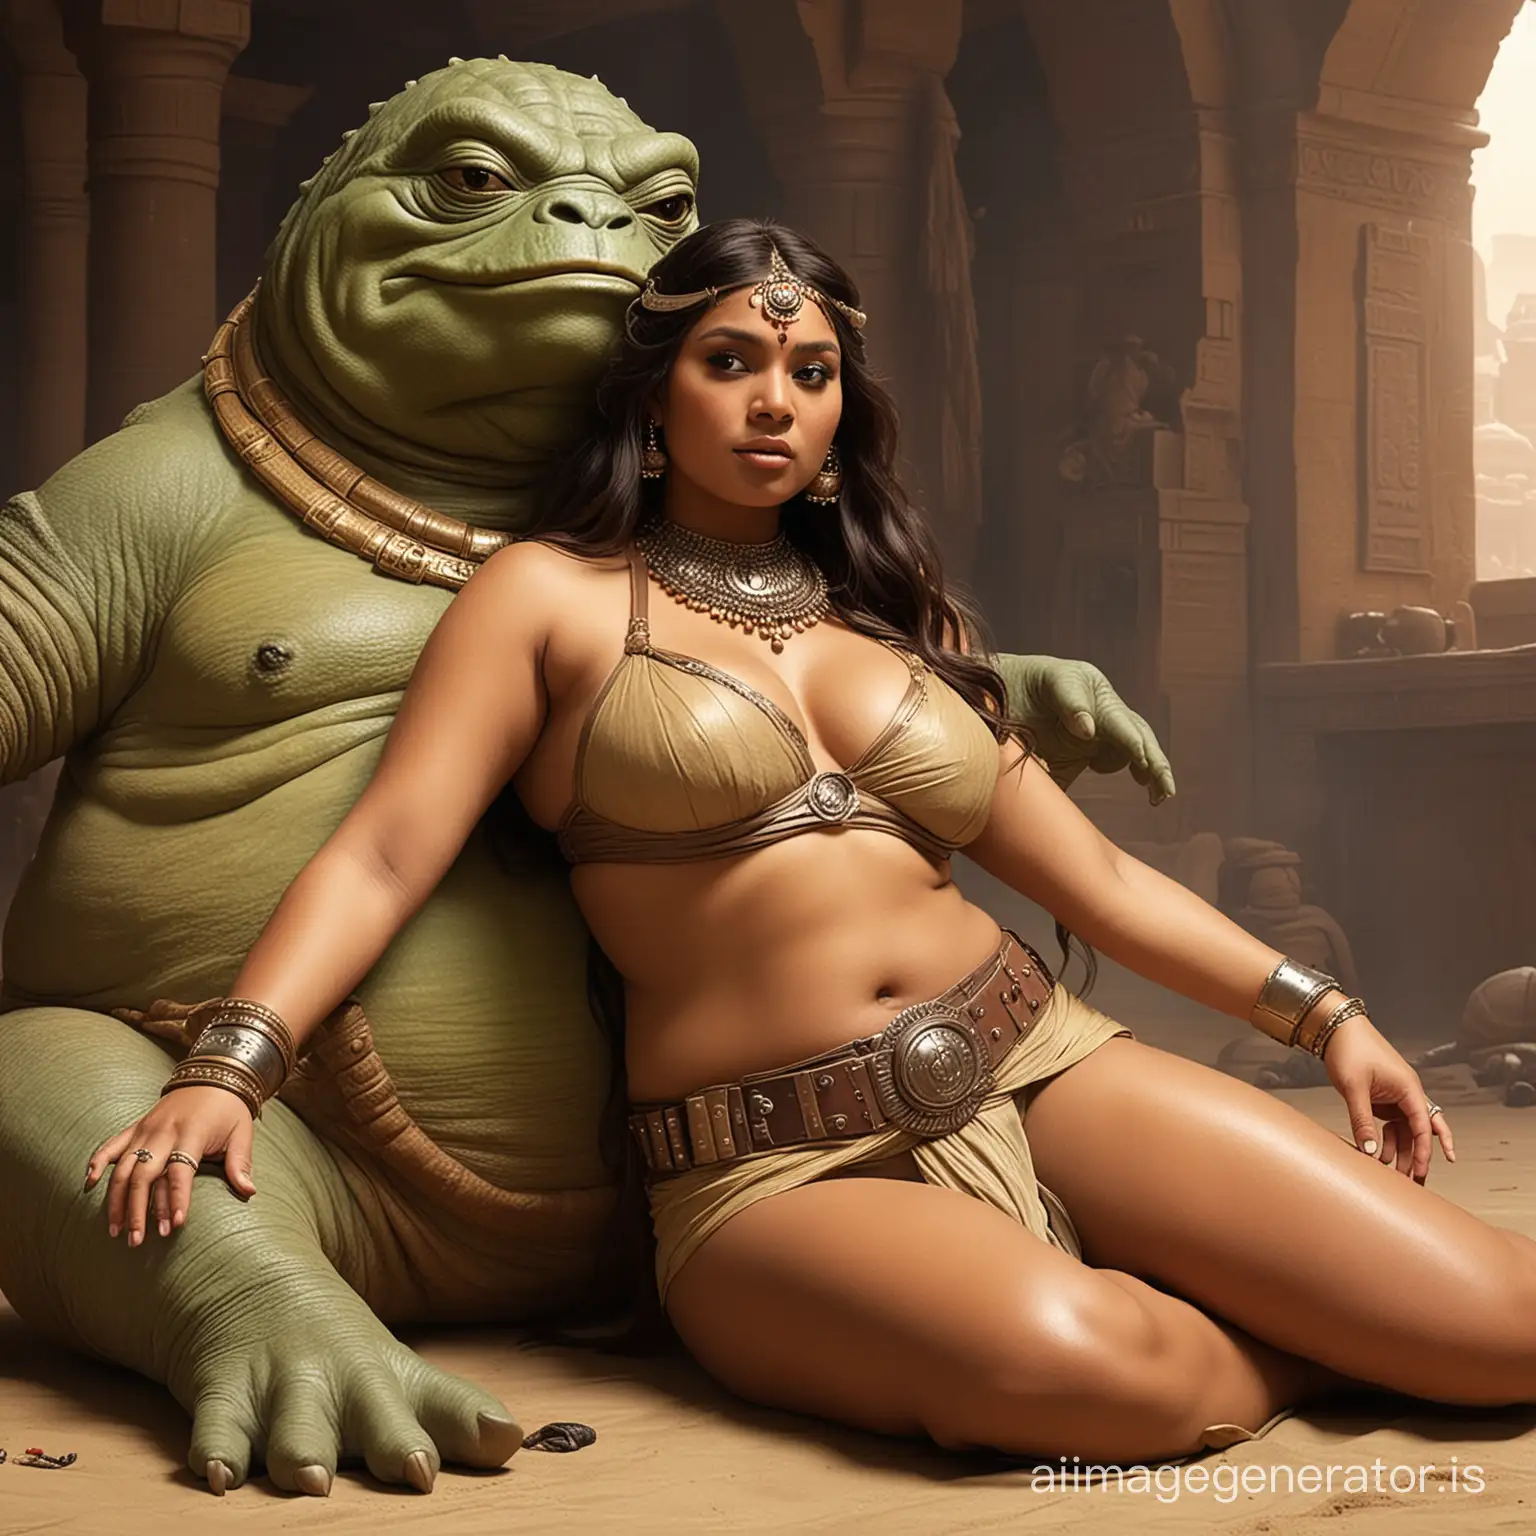 Jabba-The-Hutt-Dominates-Indian-Princess-Slave-SciFi-Fantasy-Art